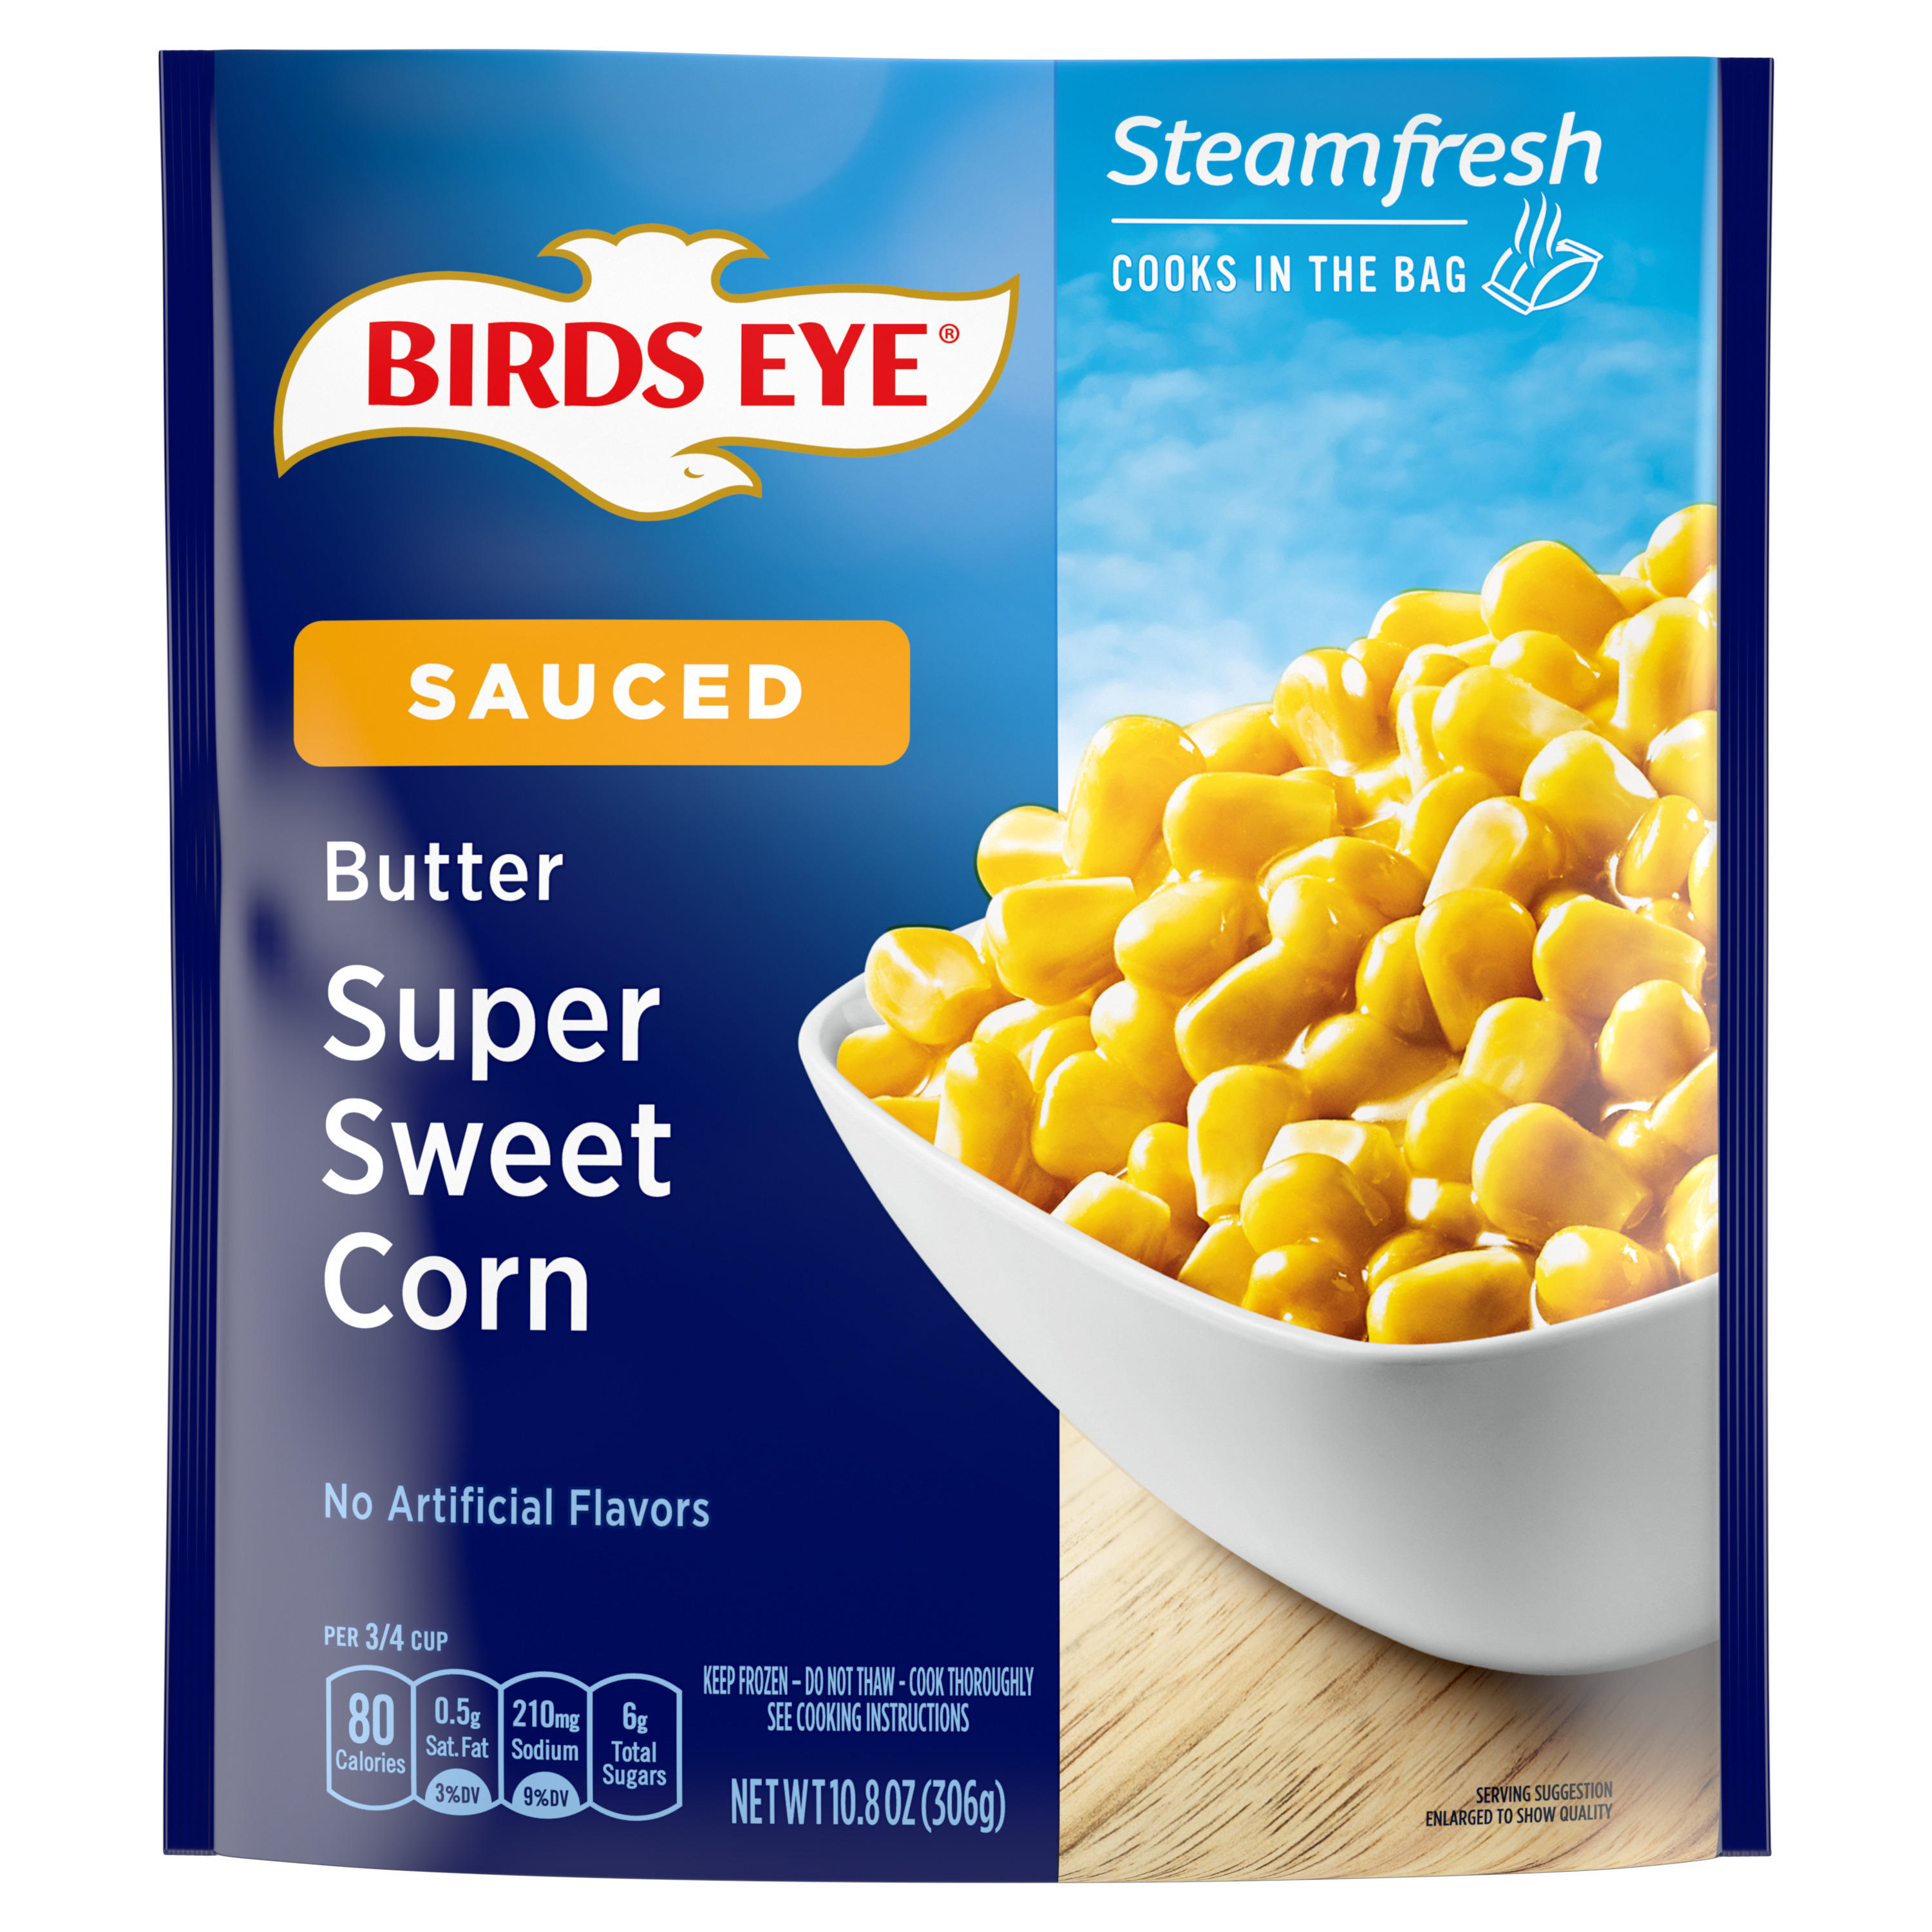 Birds Eye Steamfresh Chef’s Favorites Sauced Super Sweet Corn with Butter Sauce